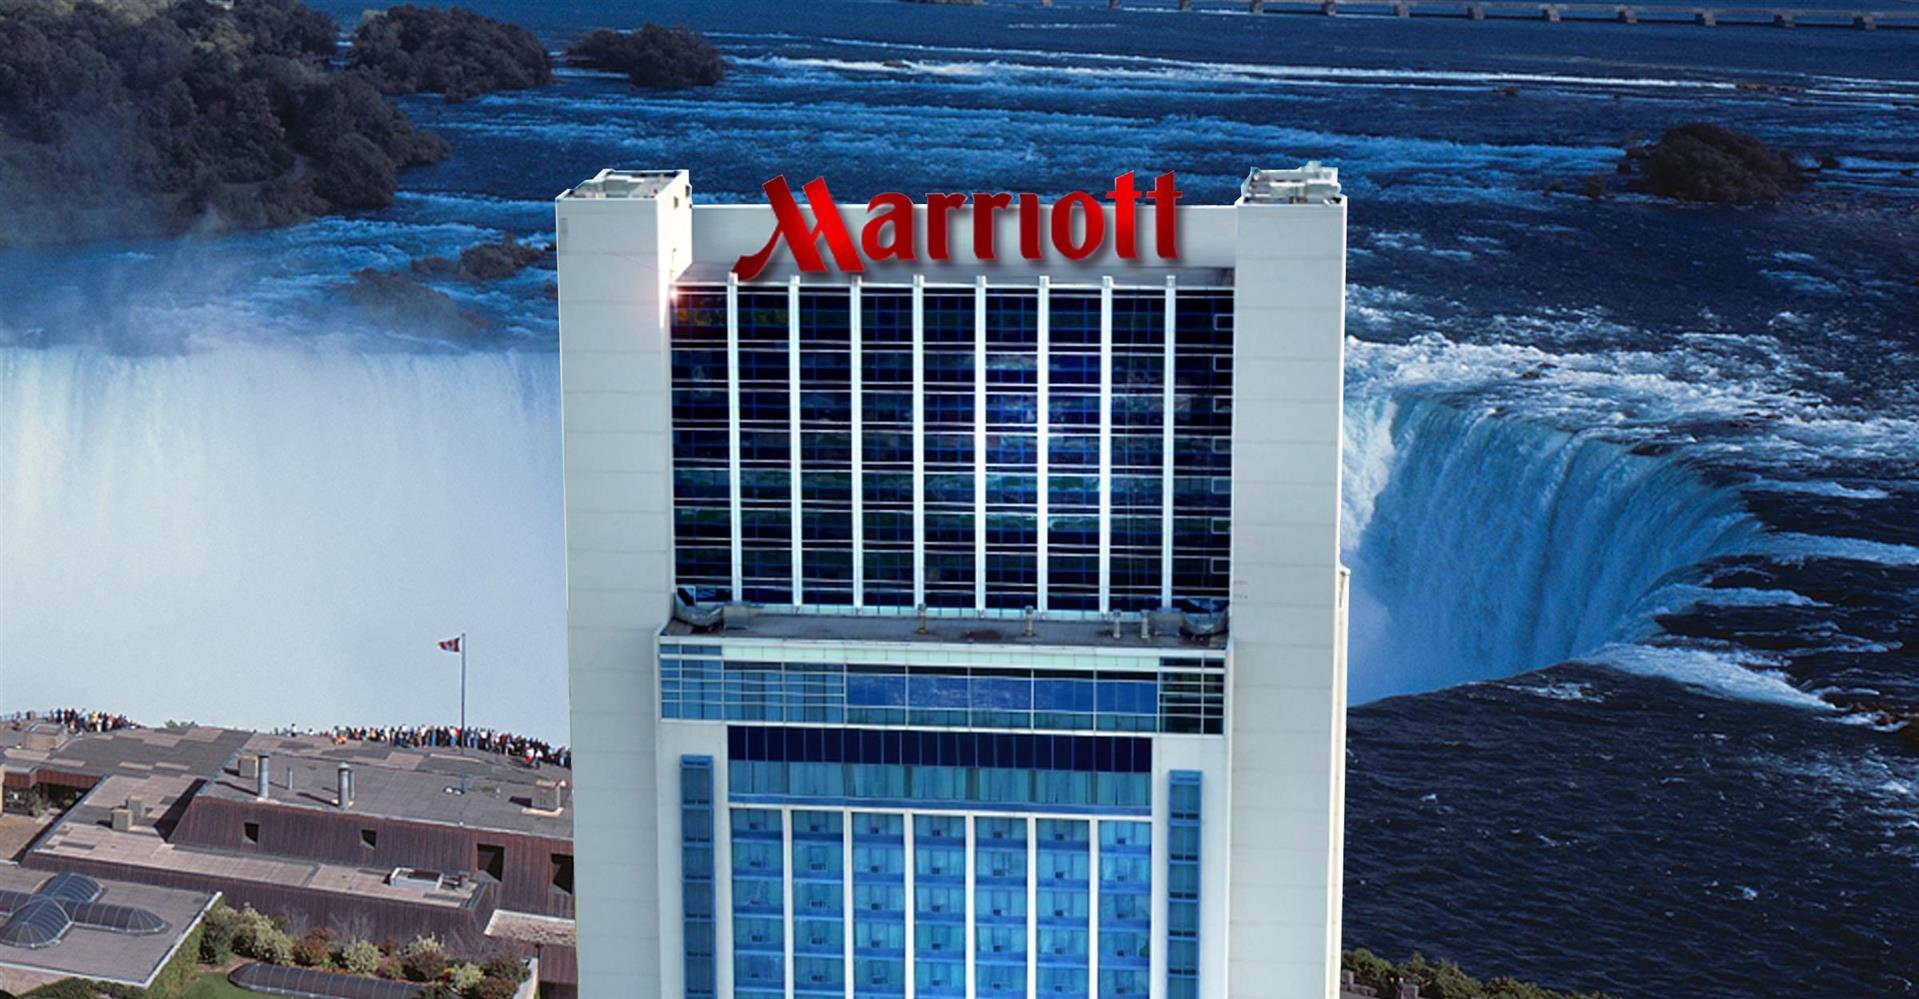 Marriott on the Falls in Niagara Falls, ON